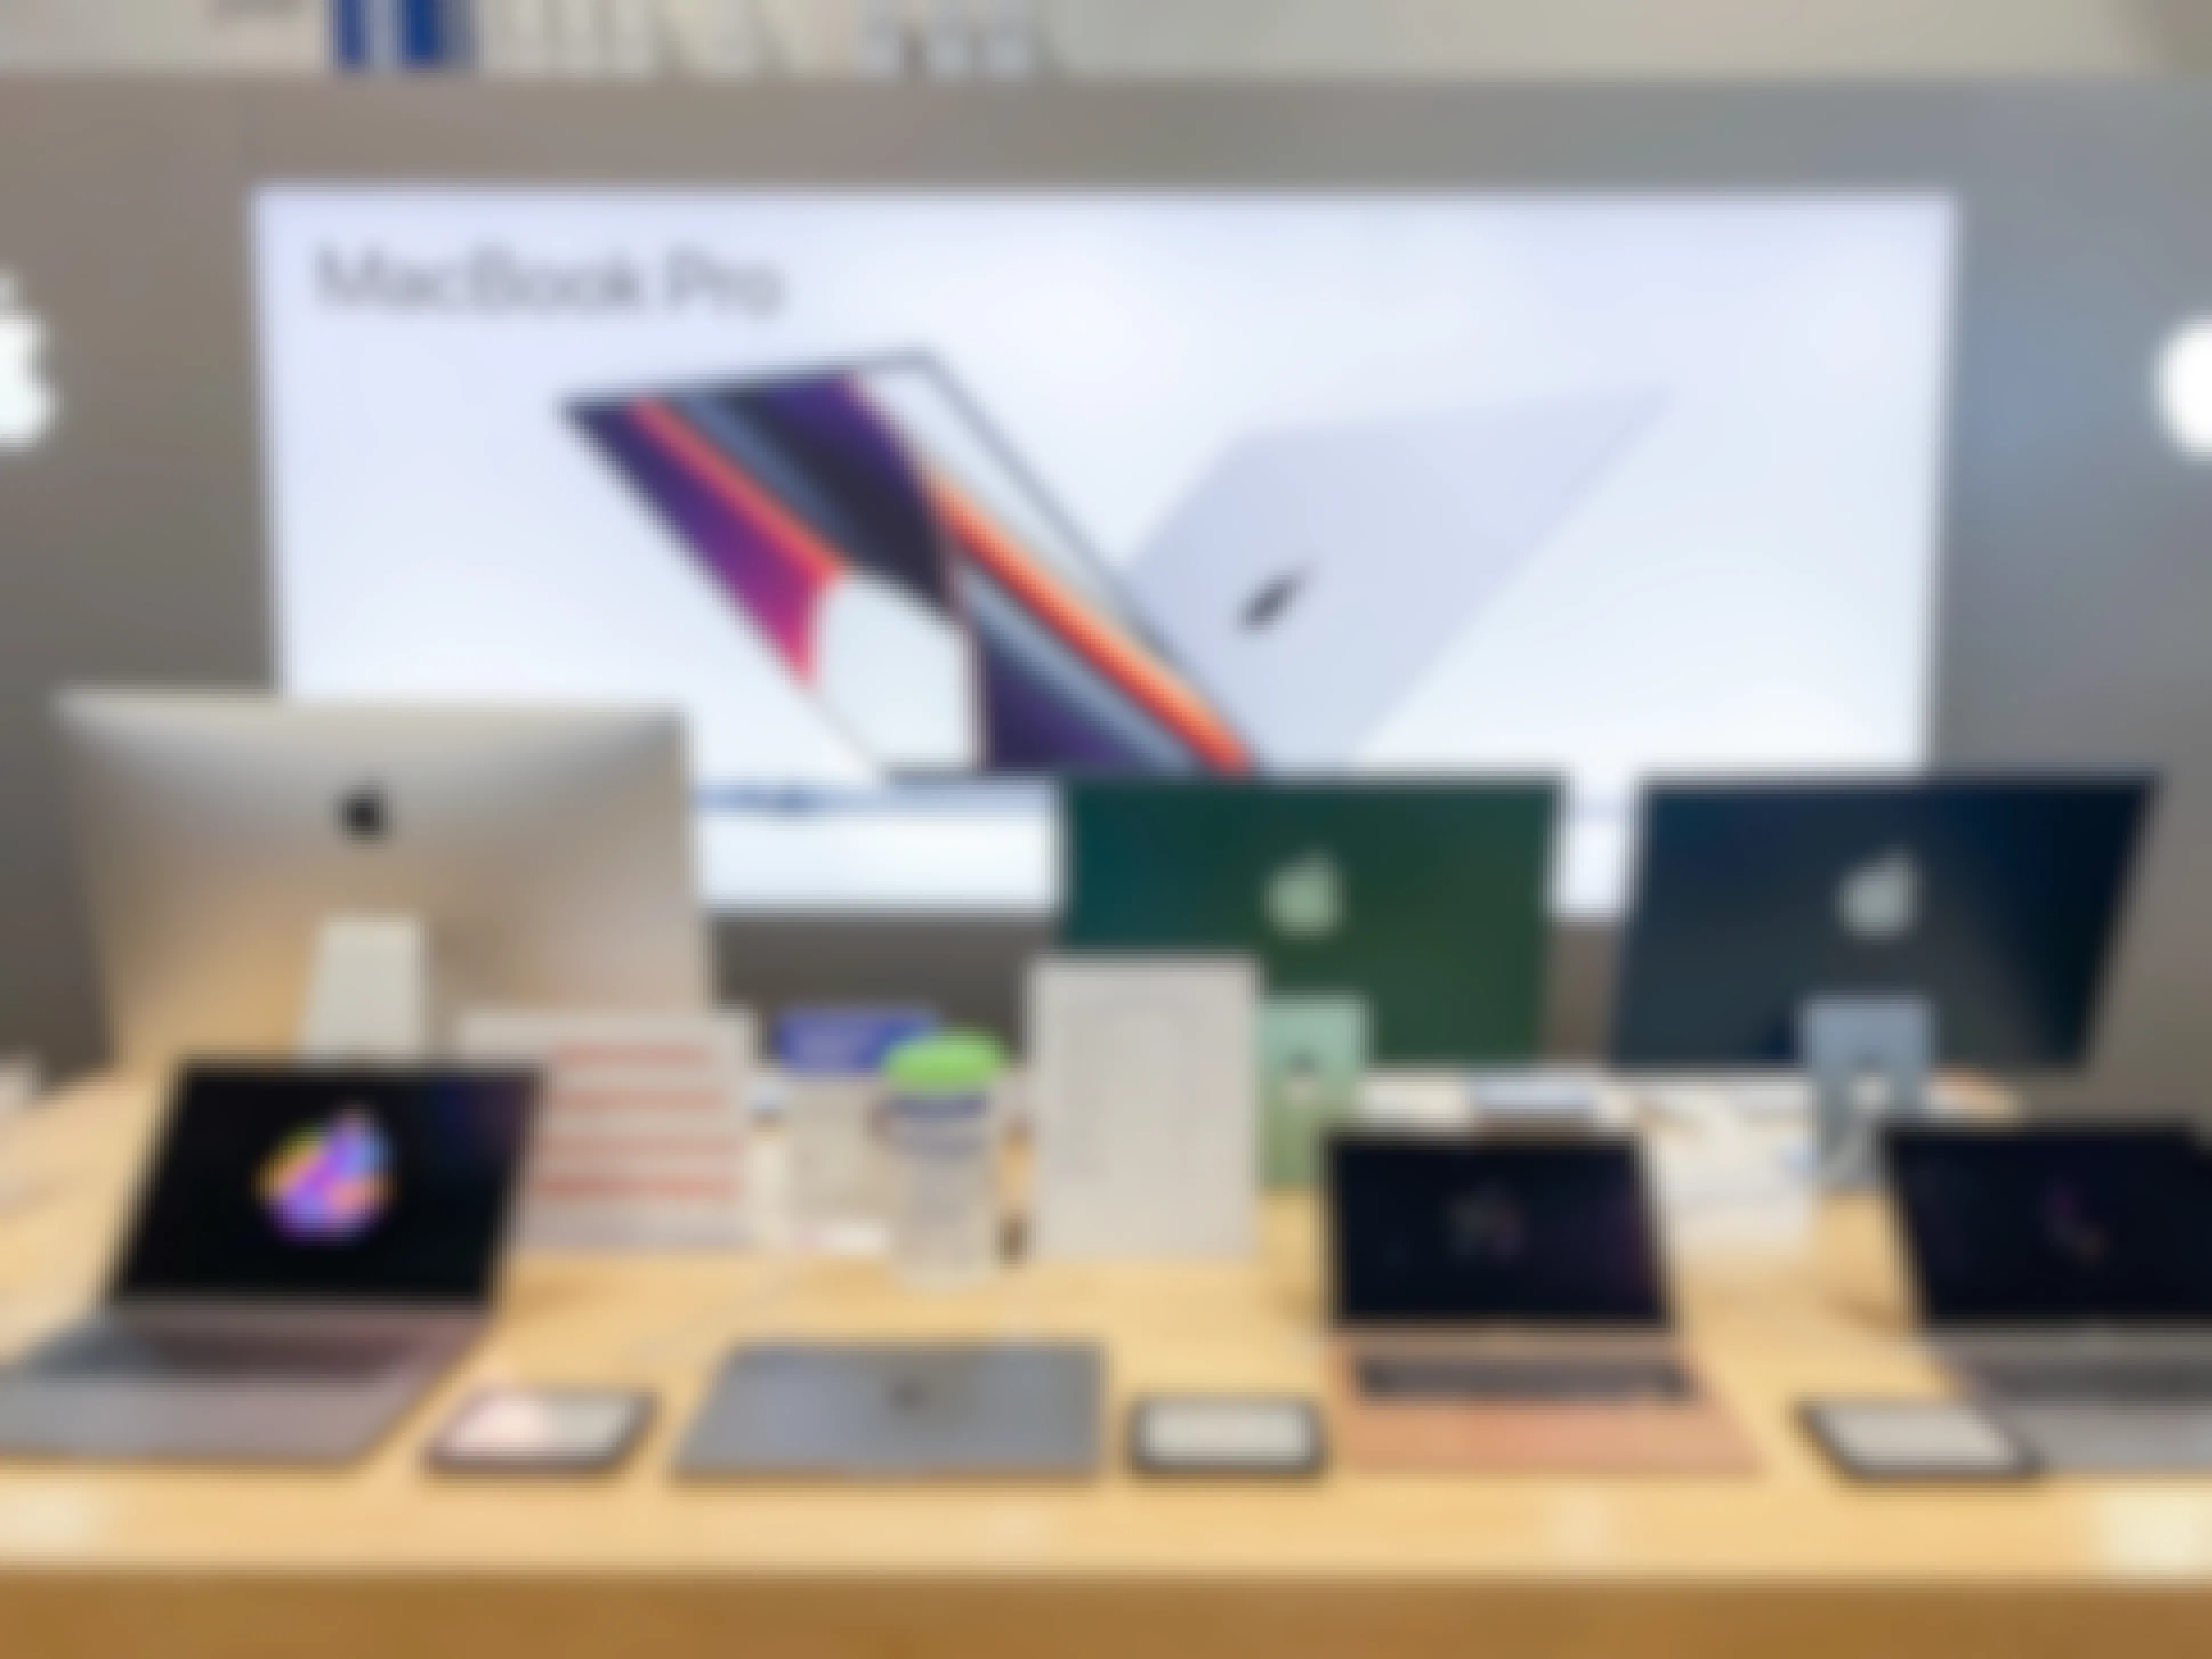 macbook pro laptops in apple store